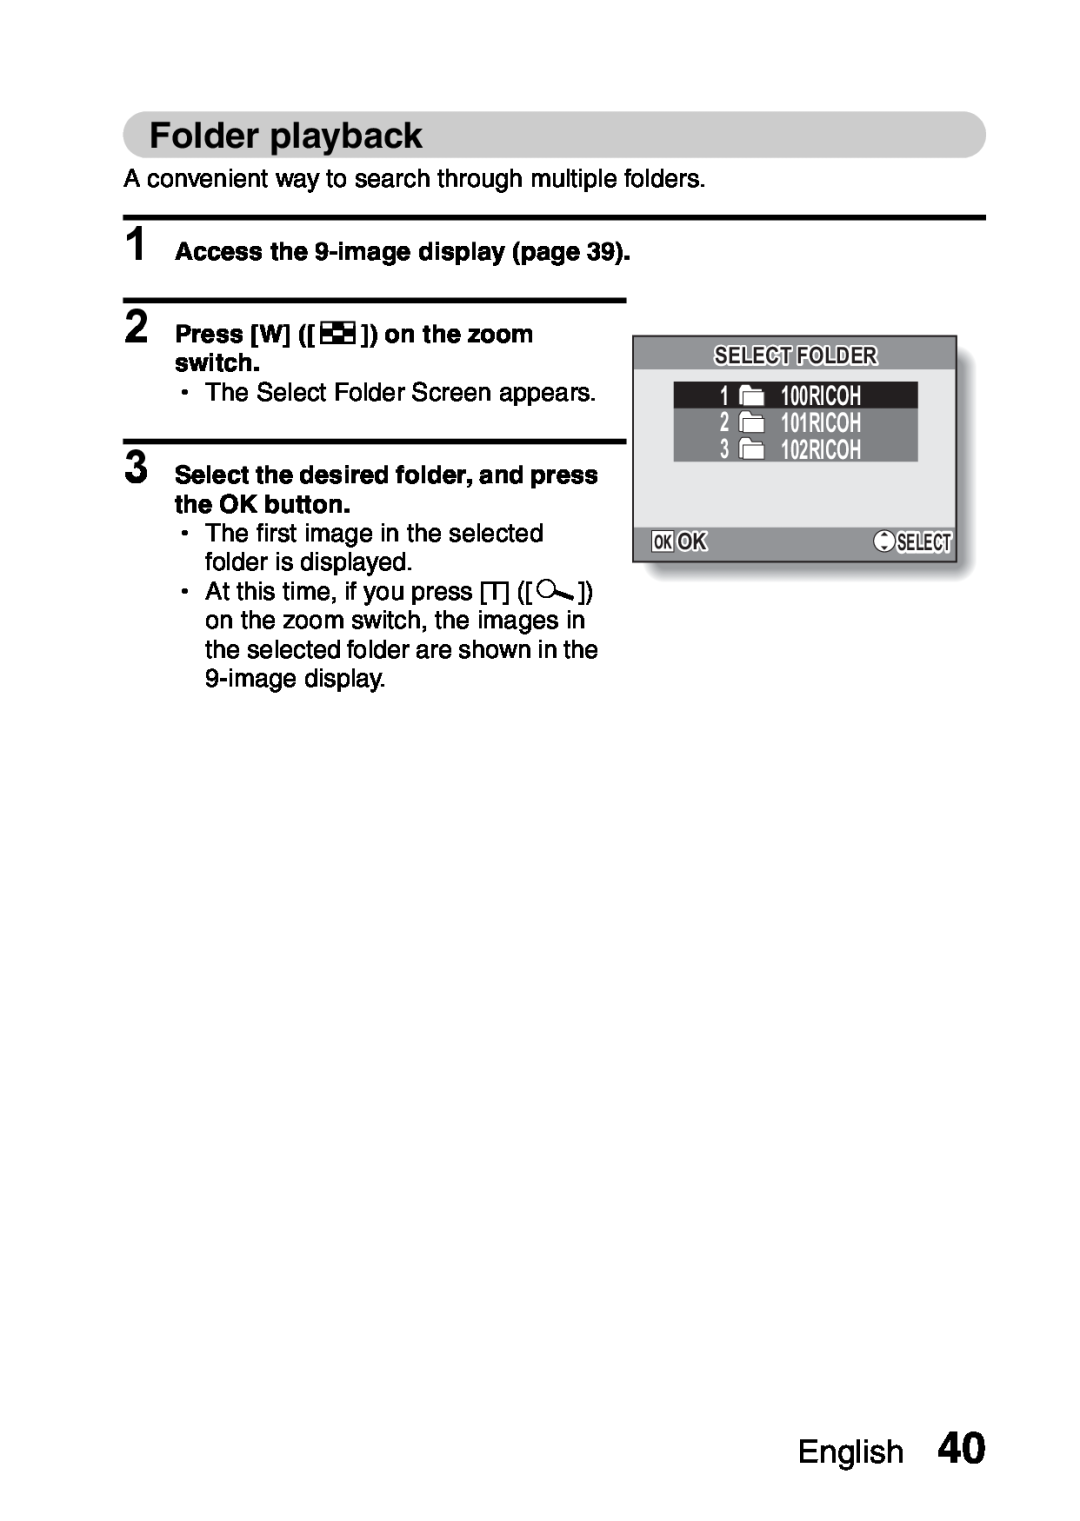 Samsung R50 Folder playback, English, 1 100RICOH 2 101RICOH 3 102RICOH, Select the desired folder, and press the OK button 